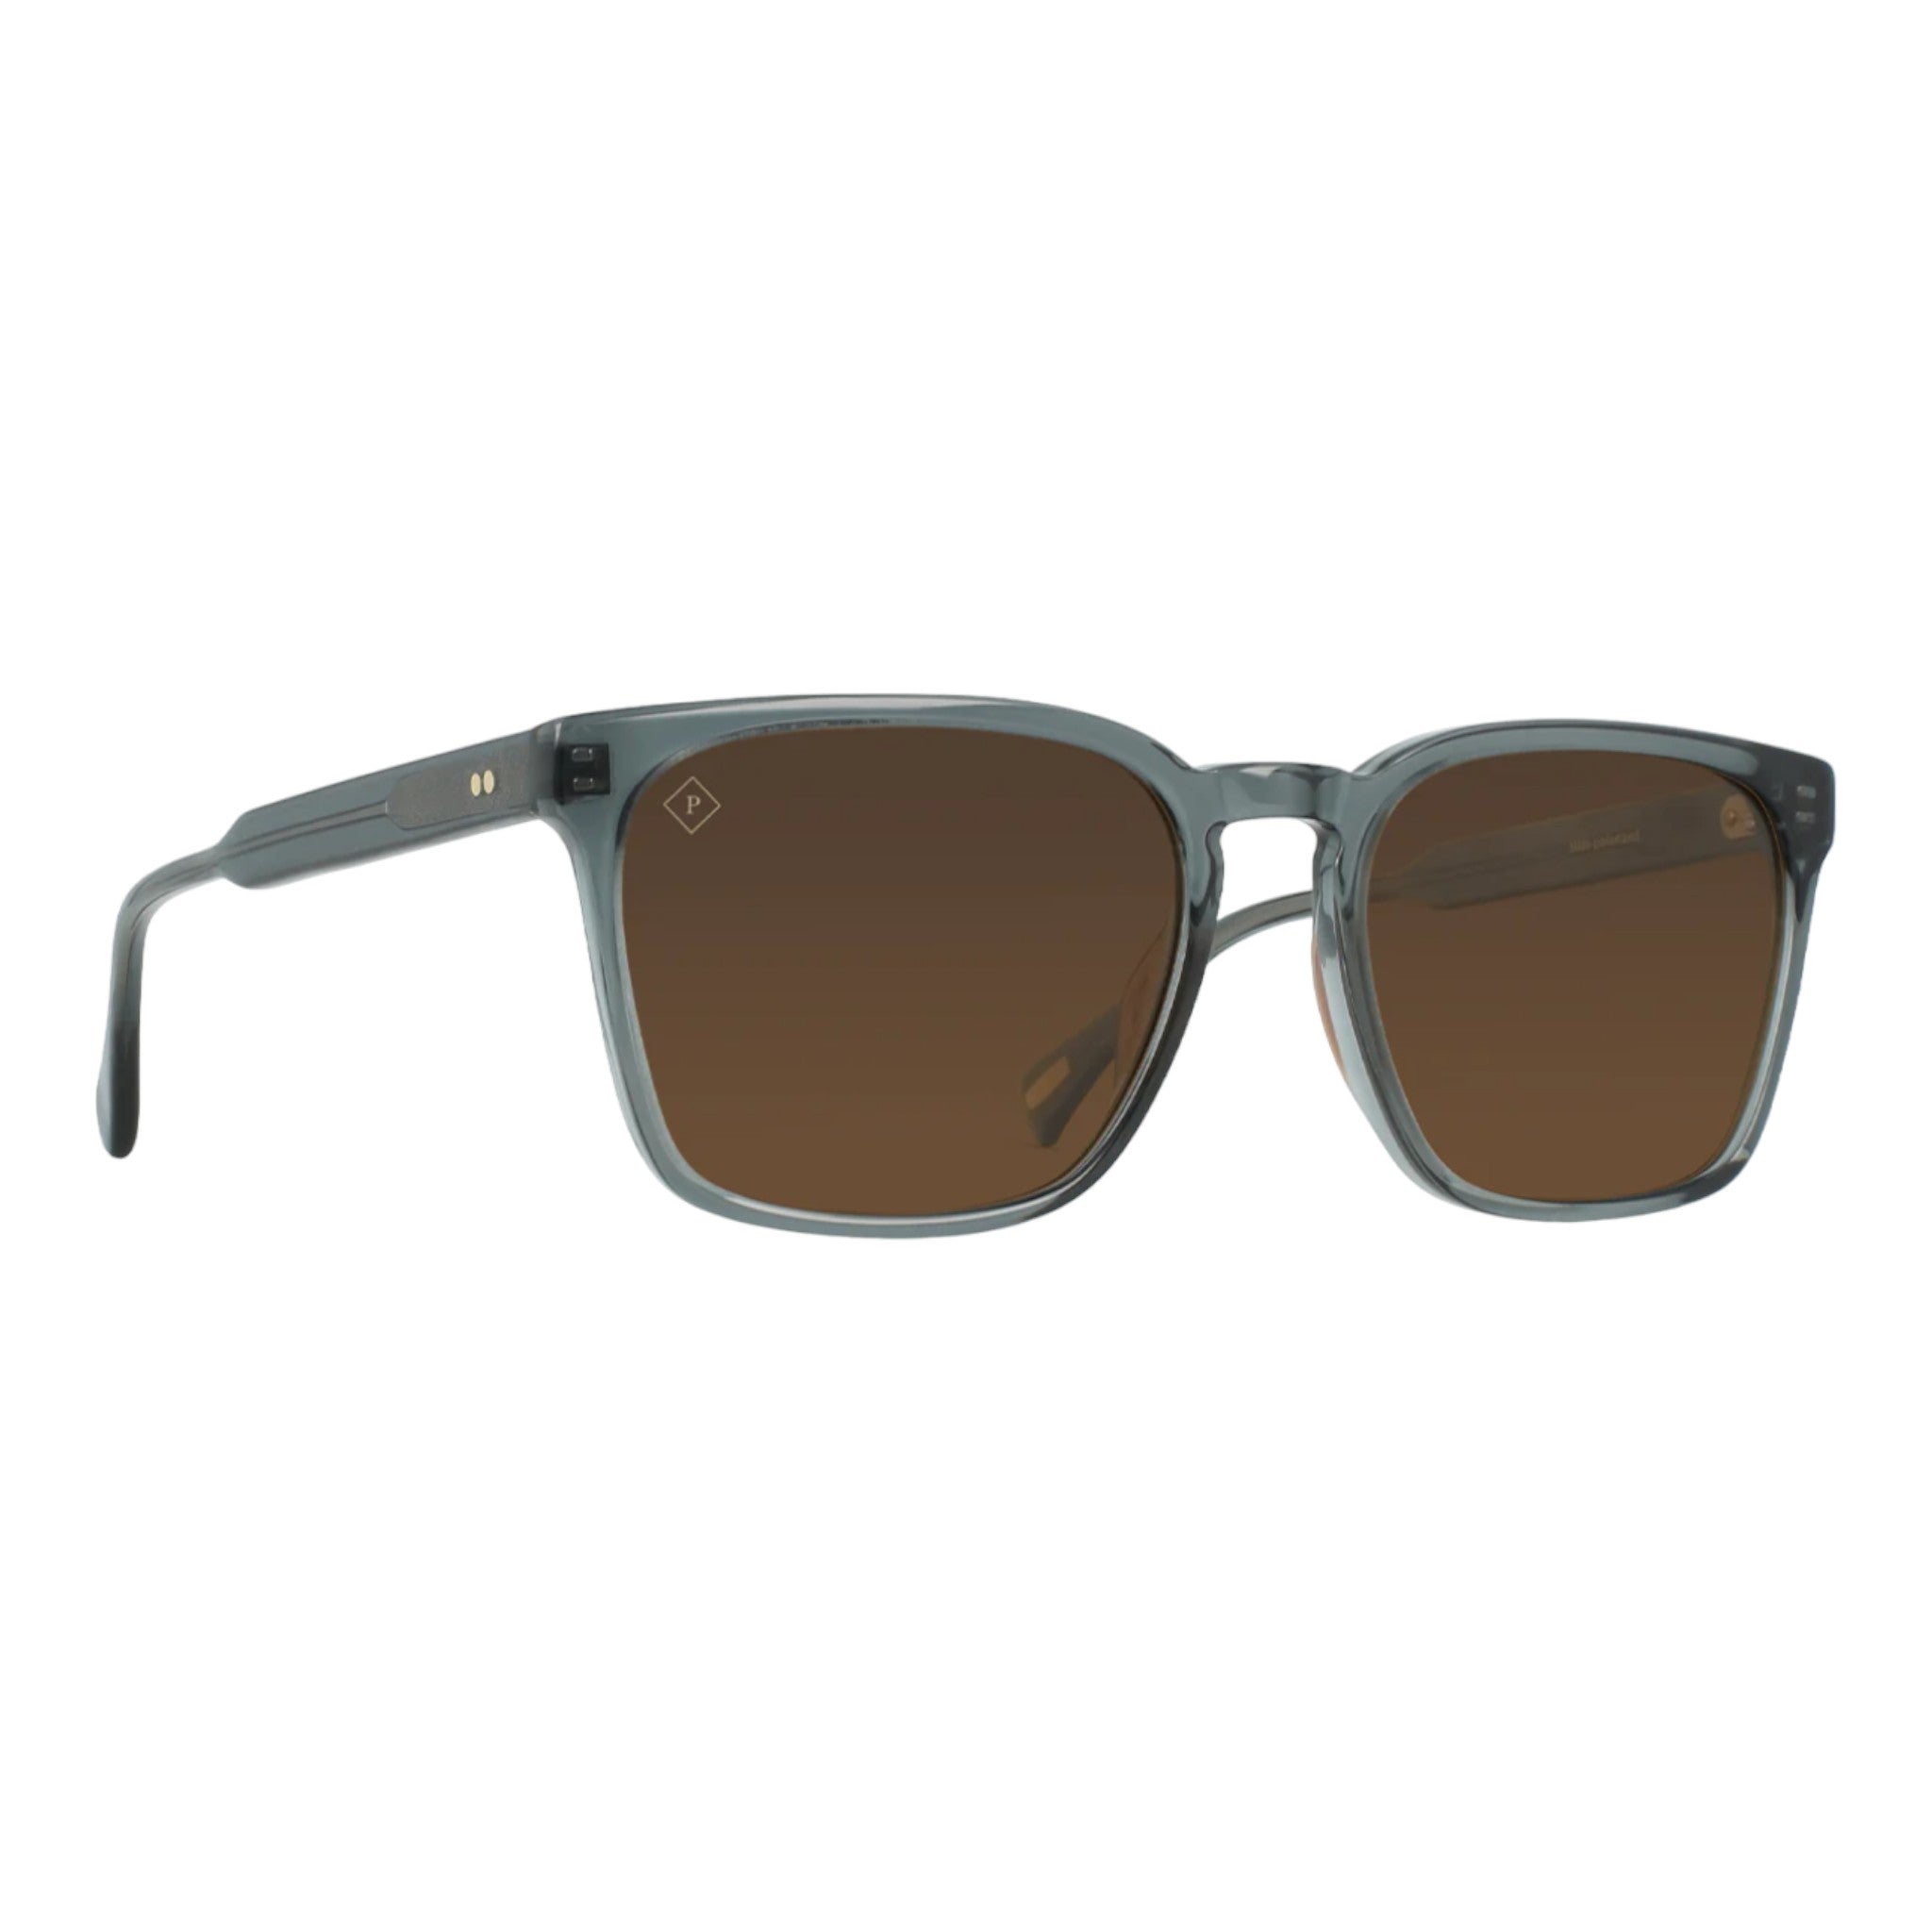 RAEN - Pierce 55 Sunglasses - Slate / Vibrant Brown Polarized